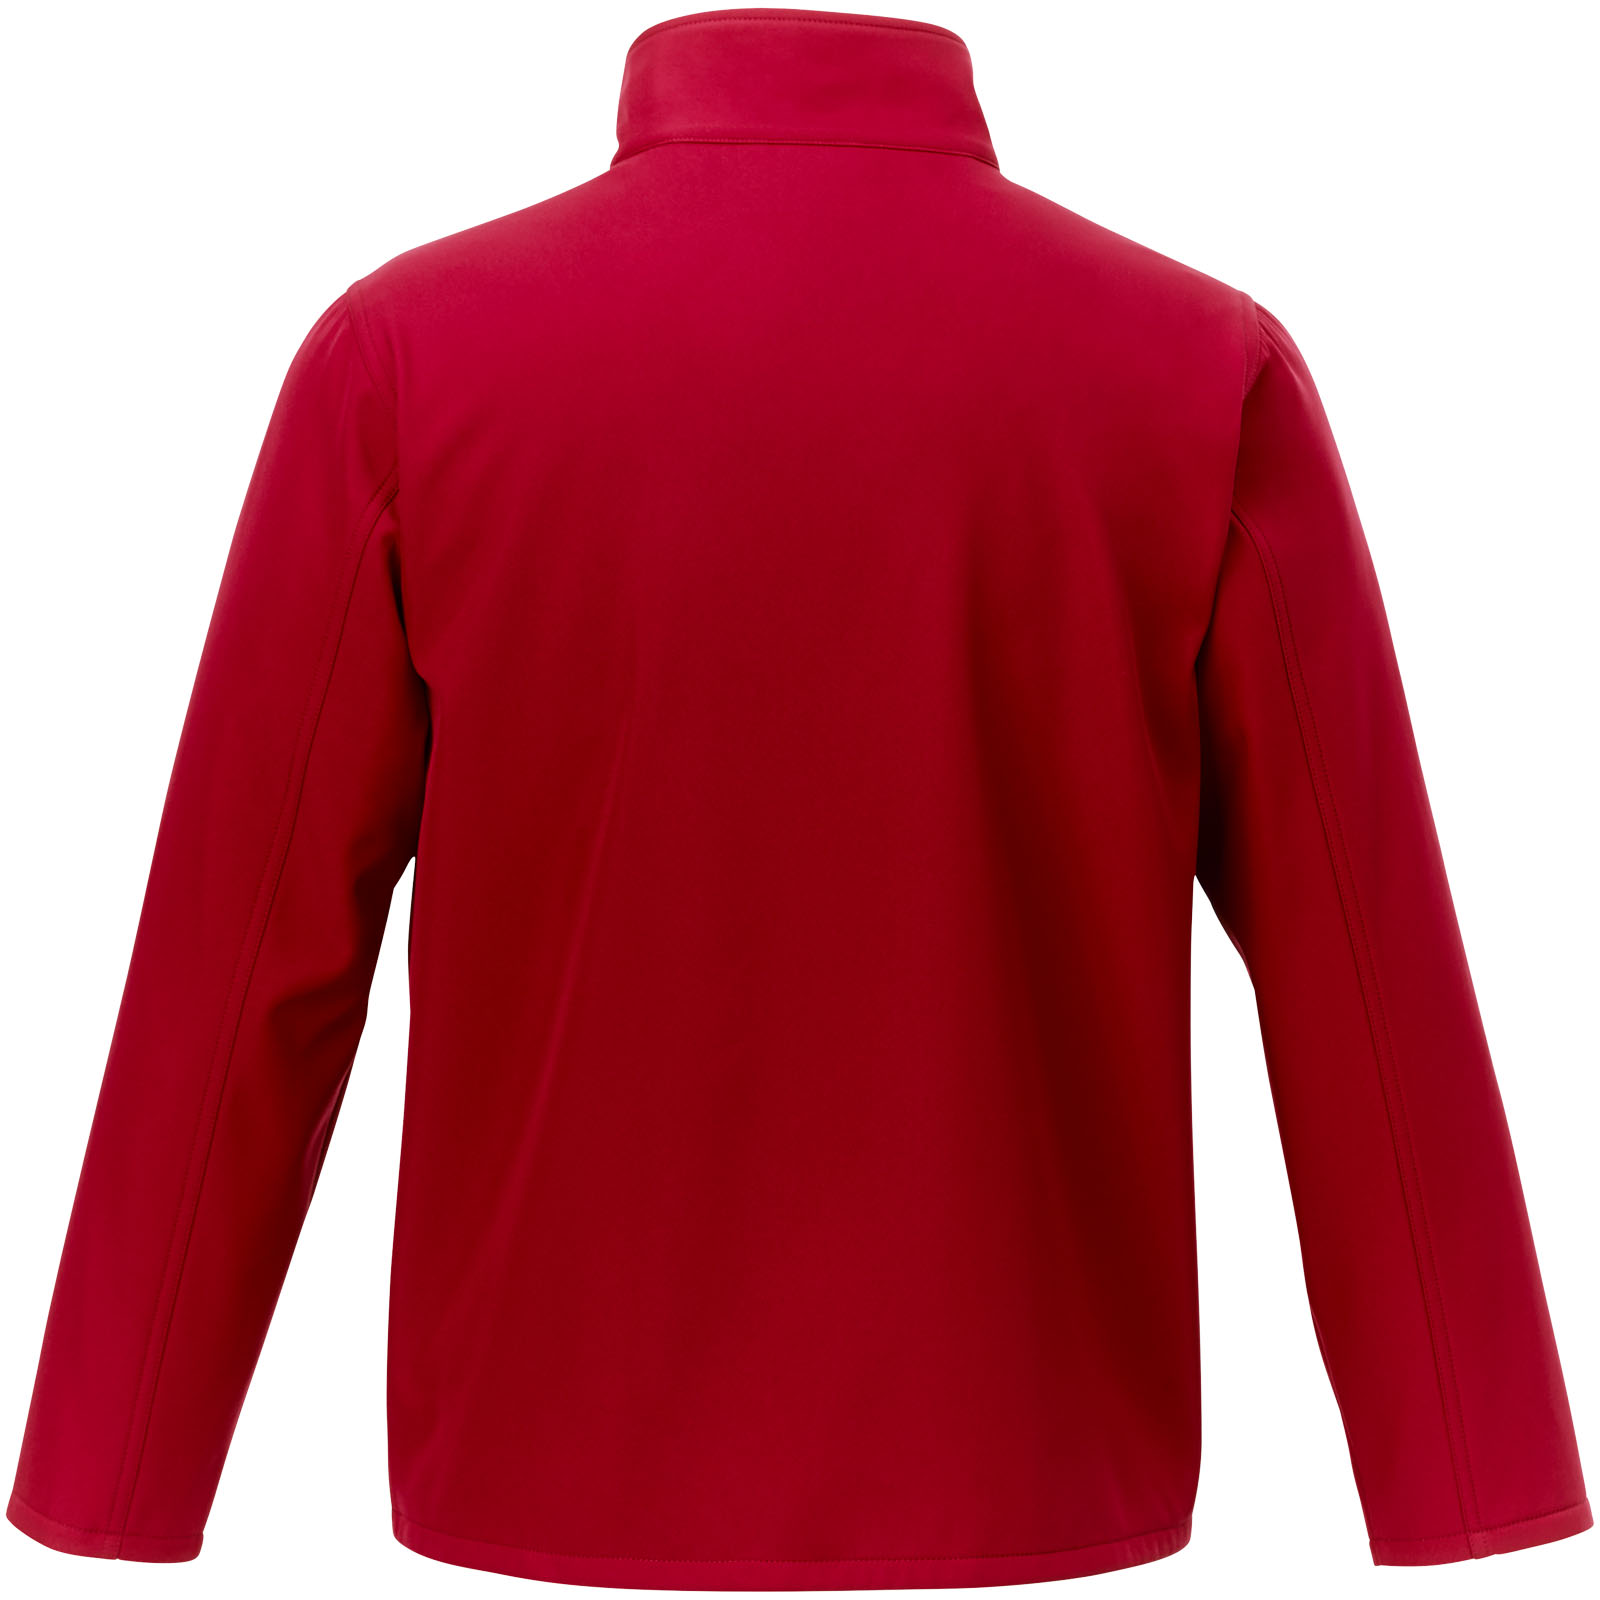 Advertising Jackets - Orion men's softshell jacket - 2